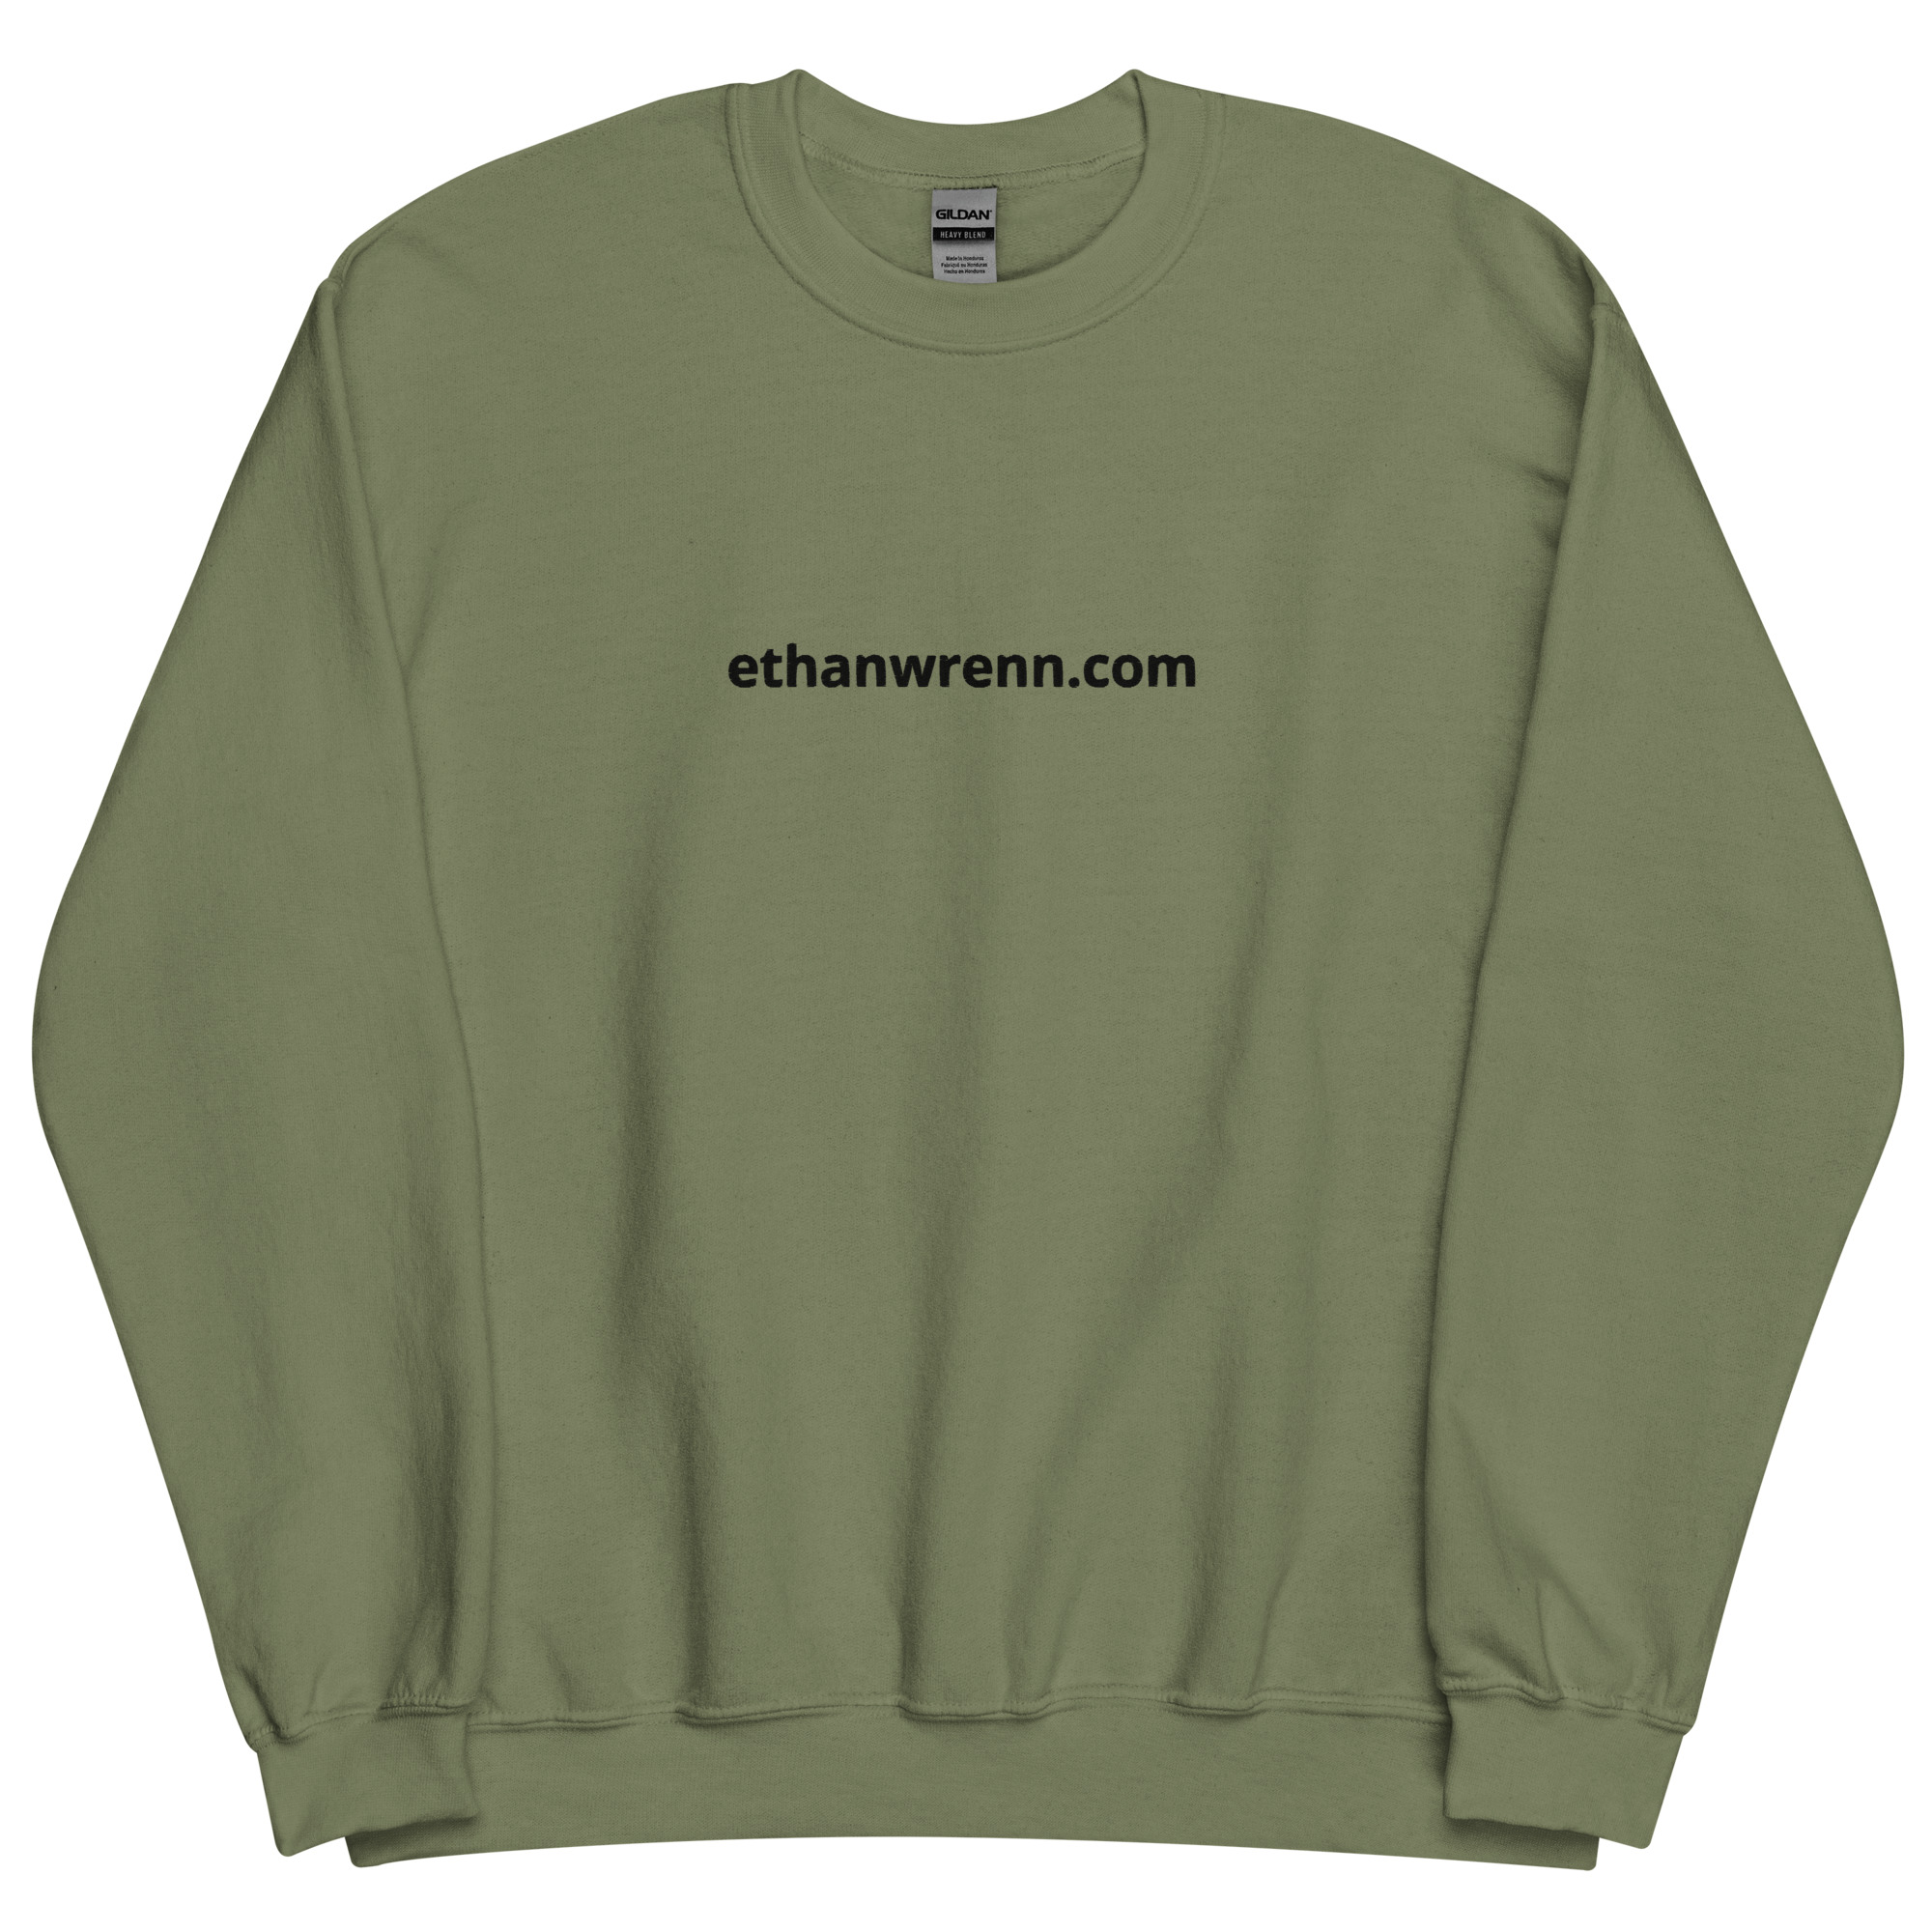 Embroidered Black ethanwrenn.com Unisex Sweatshirt